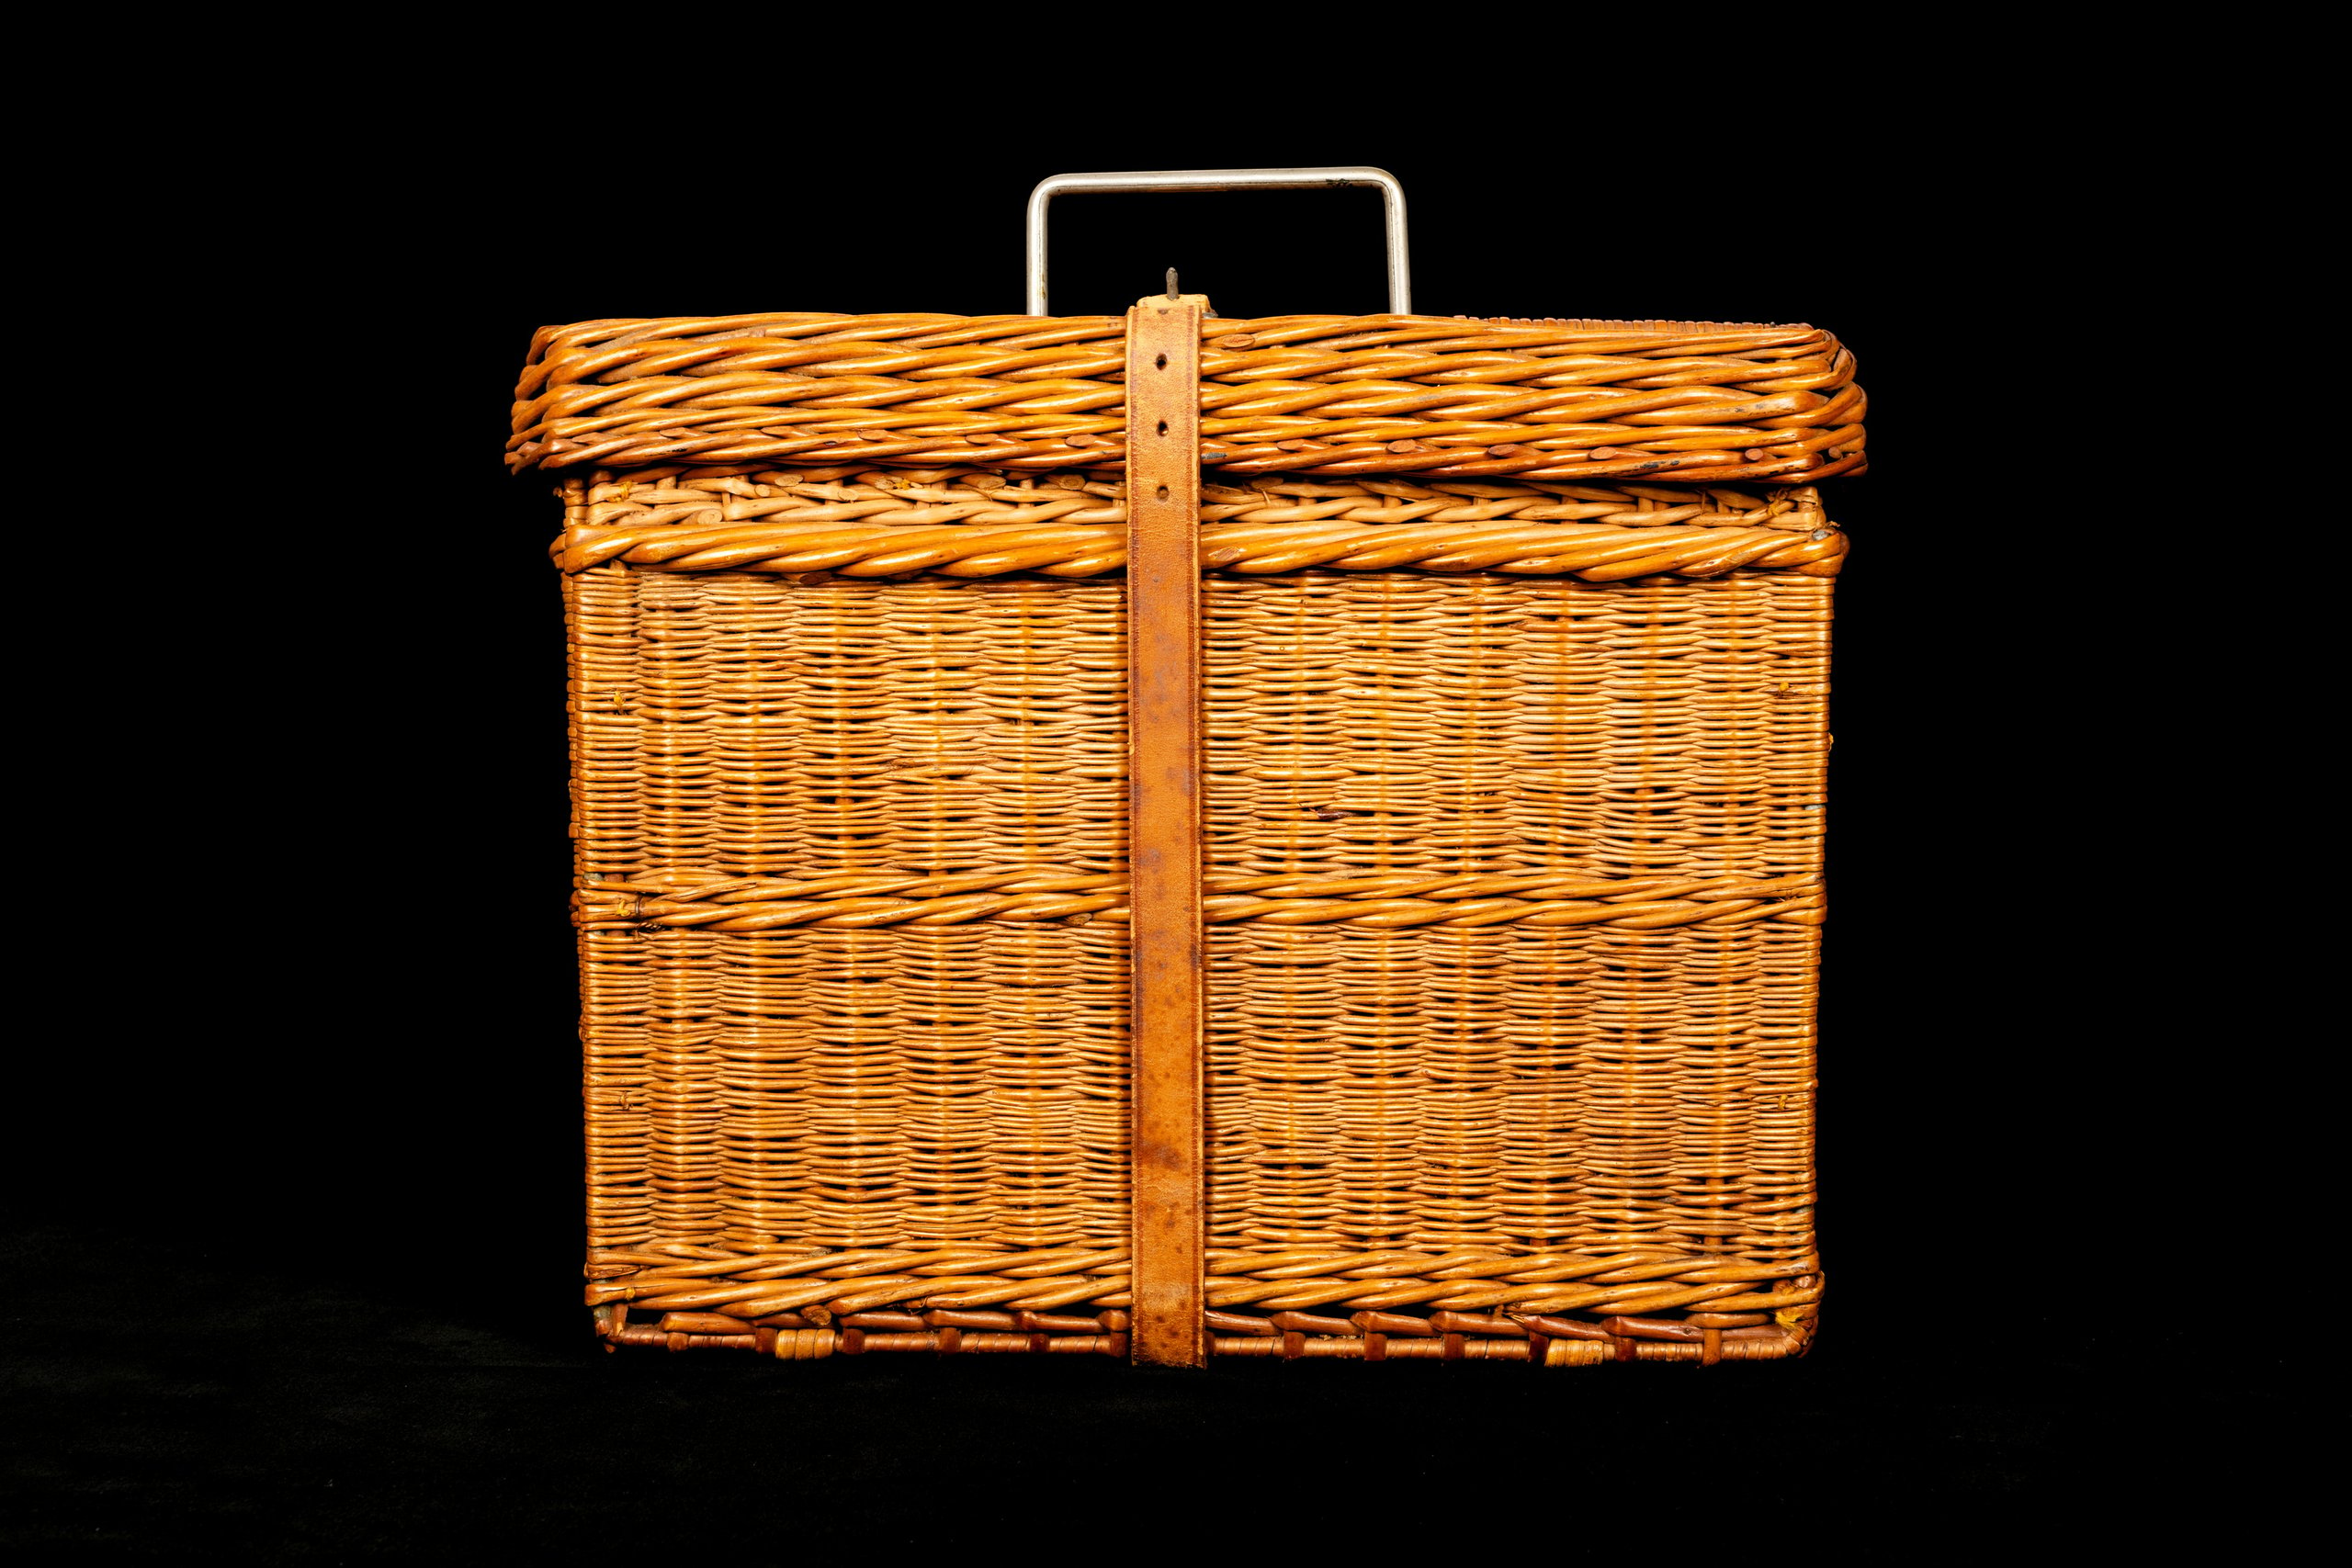 Wickerwork picnic basket from England